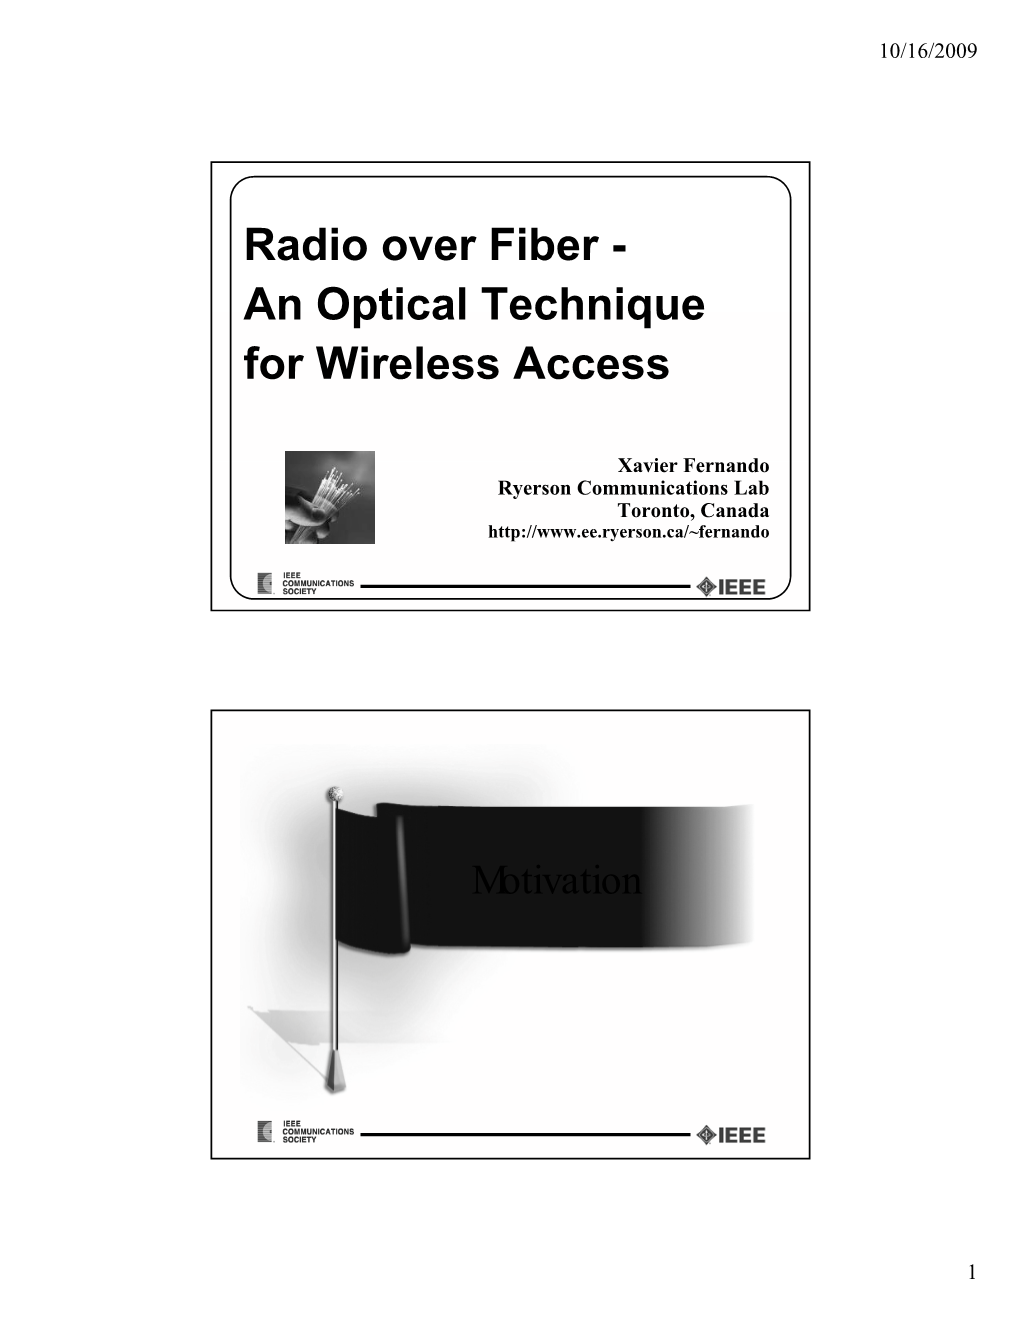 Radio Over Fiber - an Optical Technique for Wireless Access